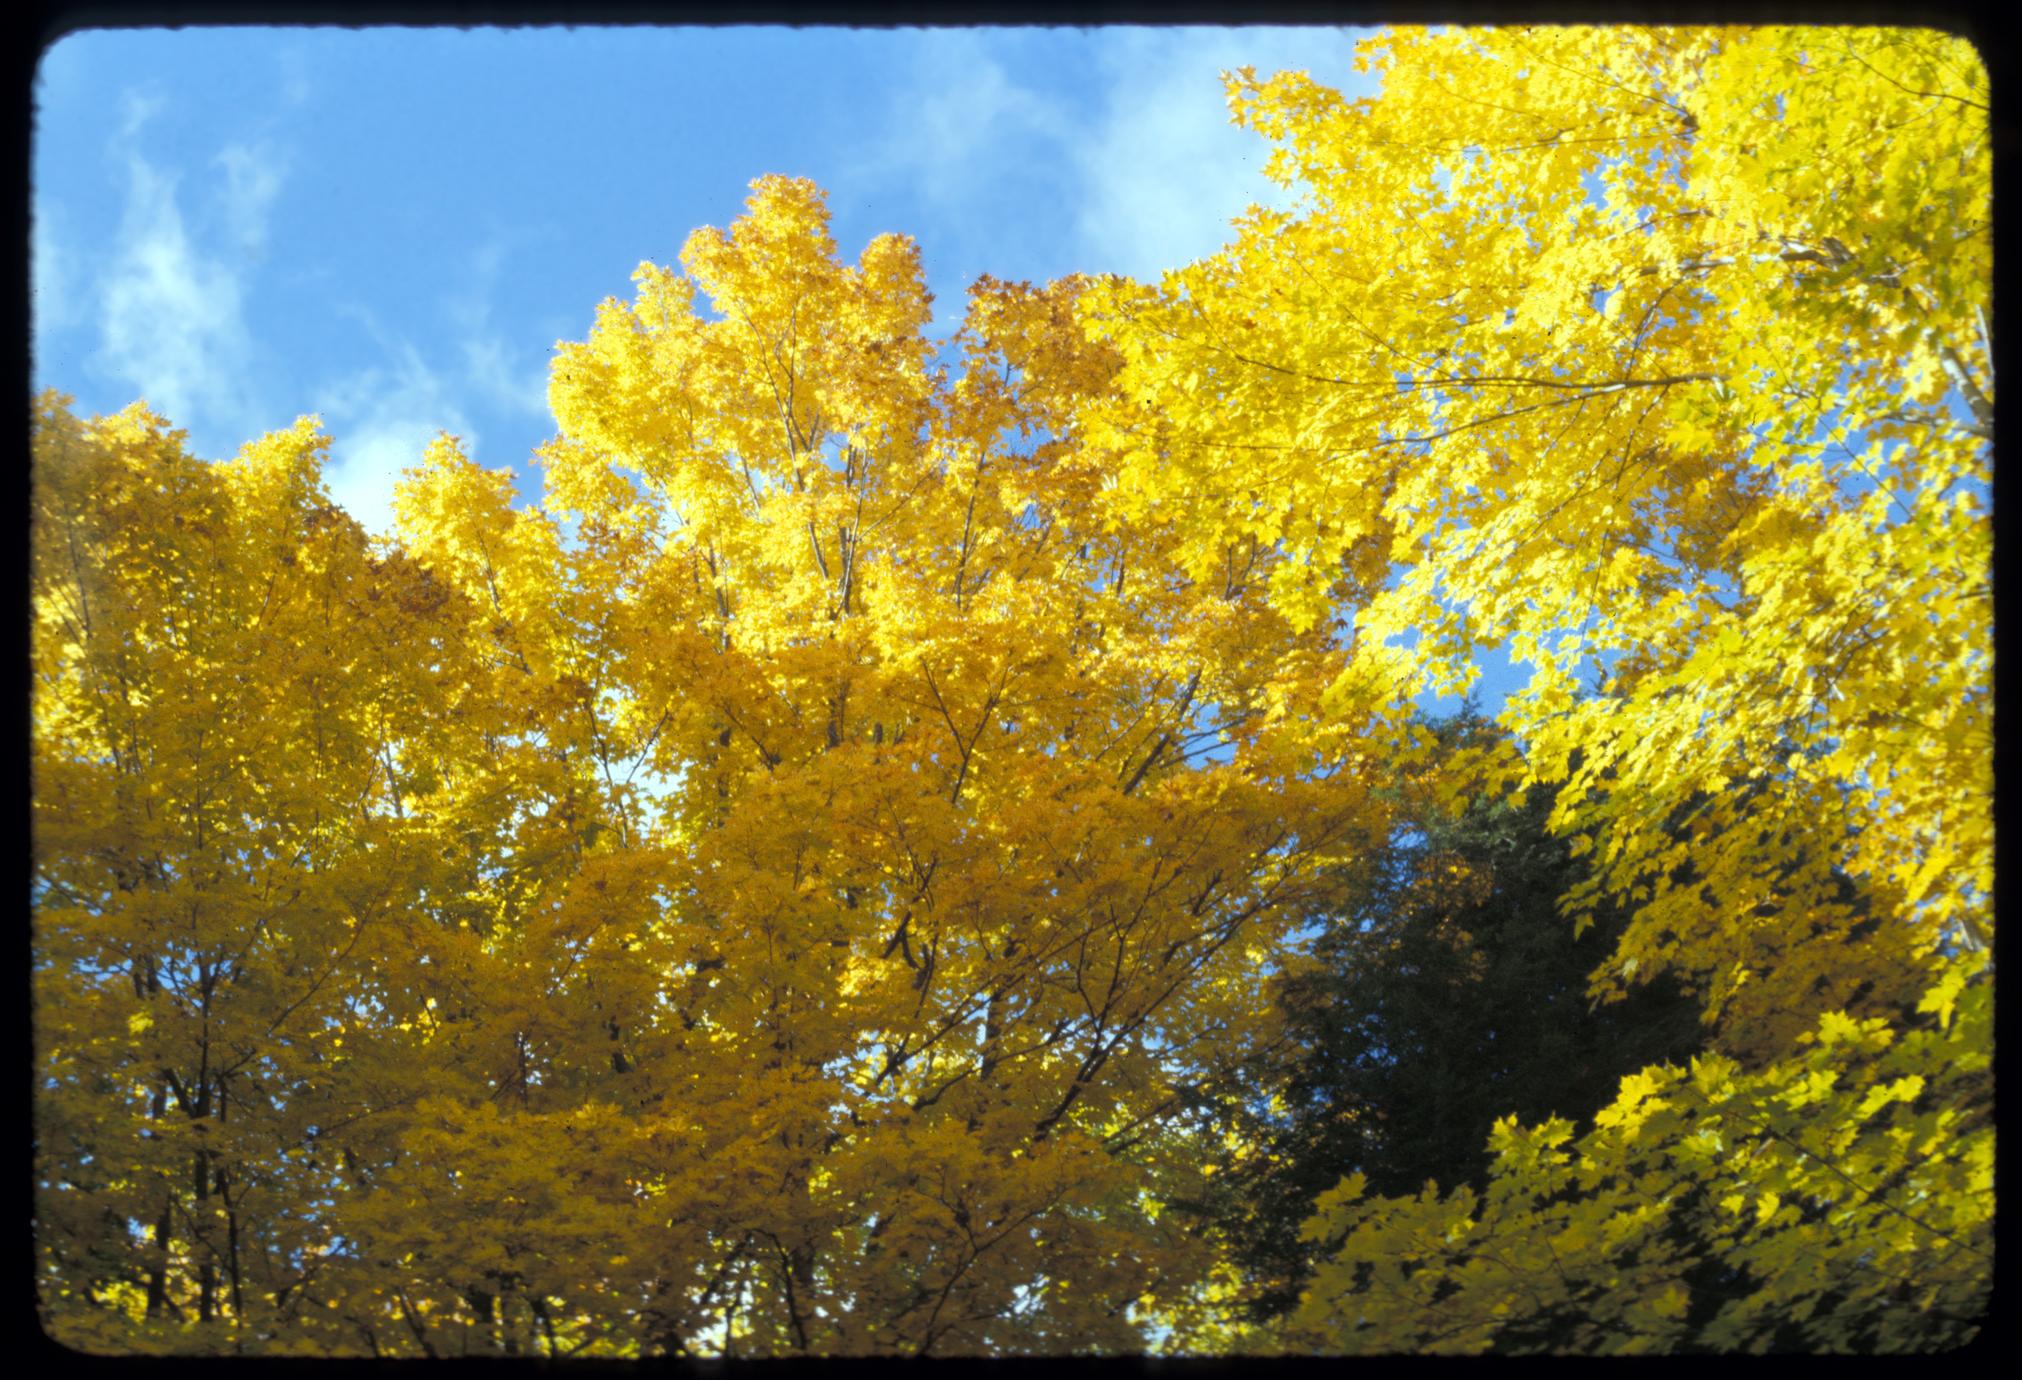 Sugar maple - fall color with hemlock